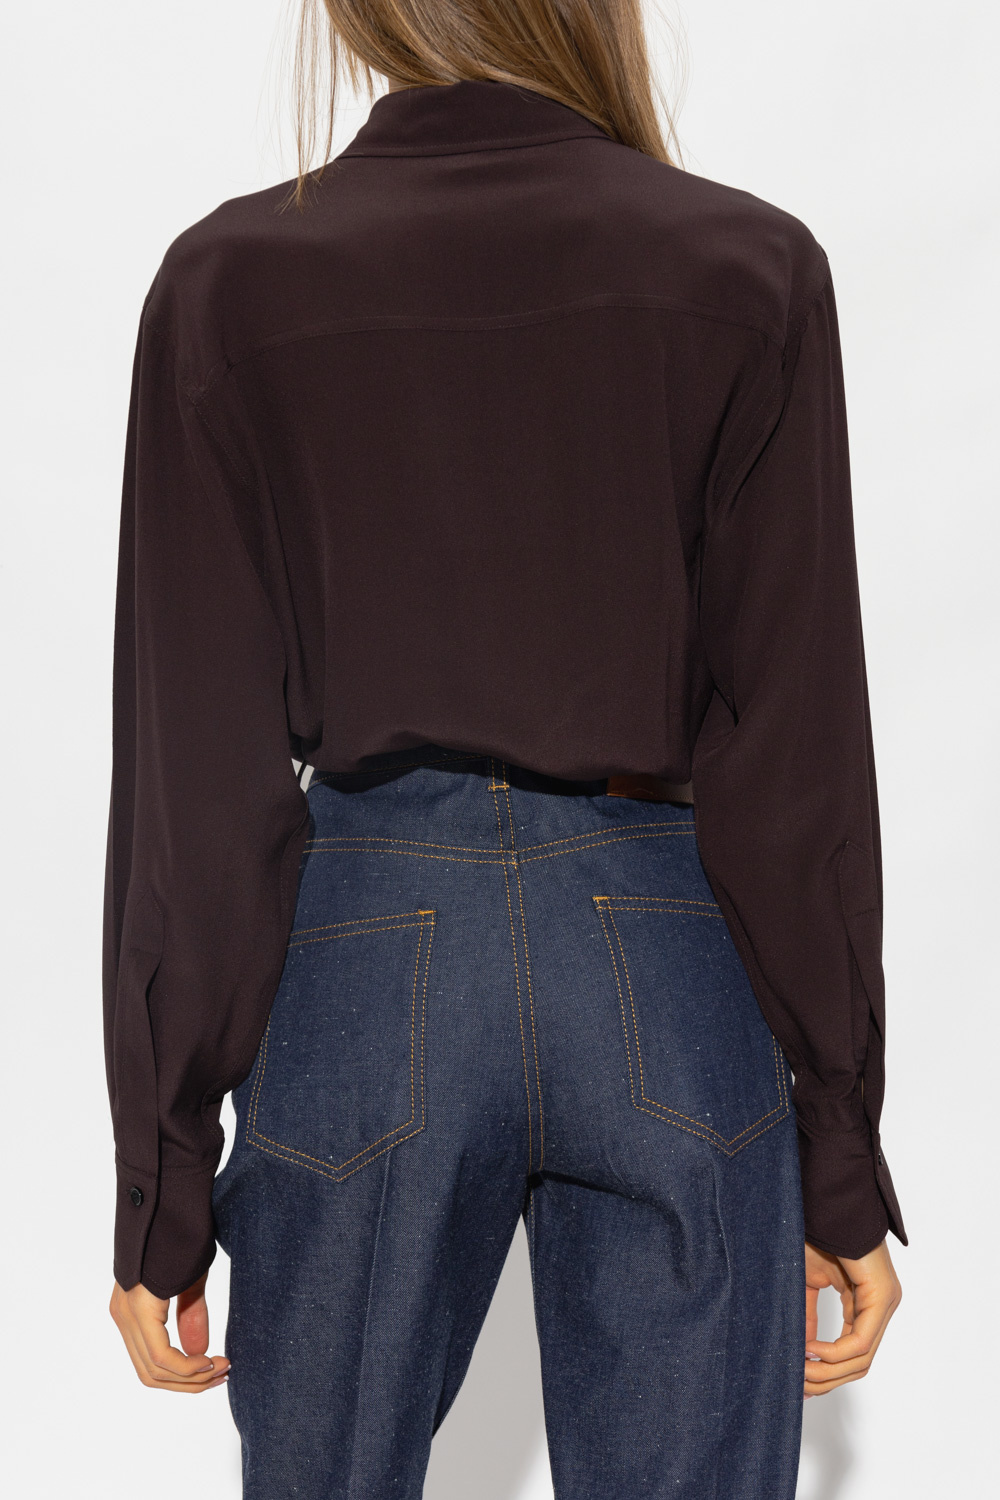 Victoria Beckham Silk shirt Revival with pockets